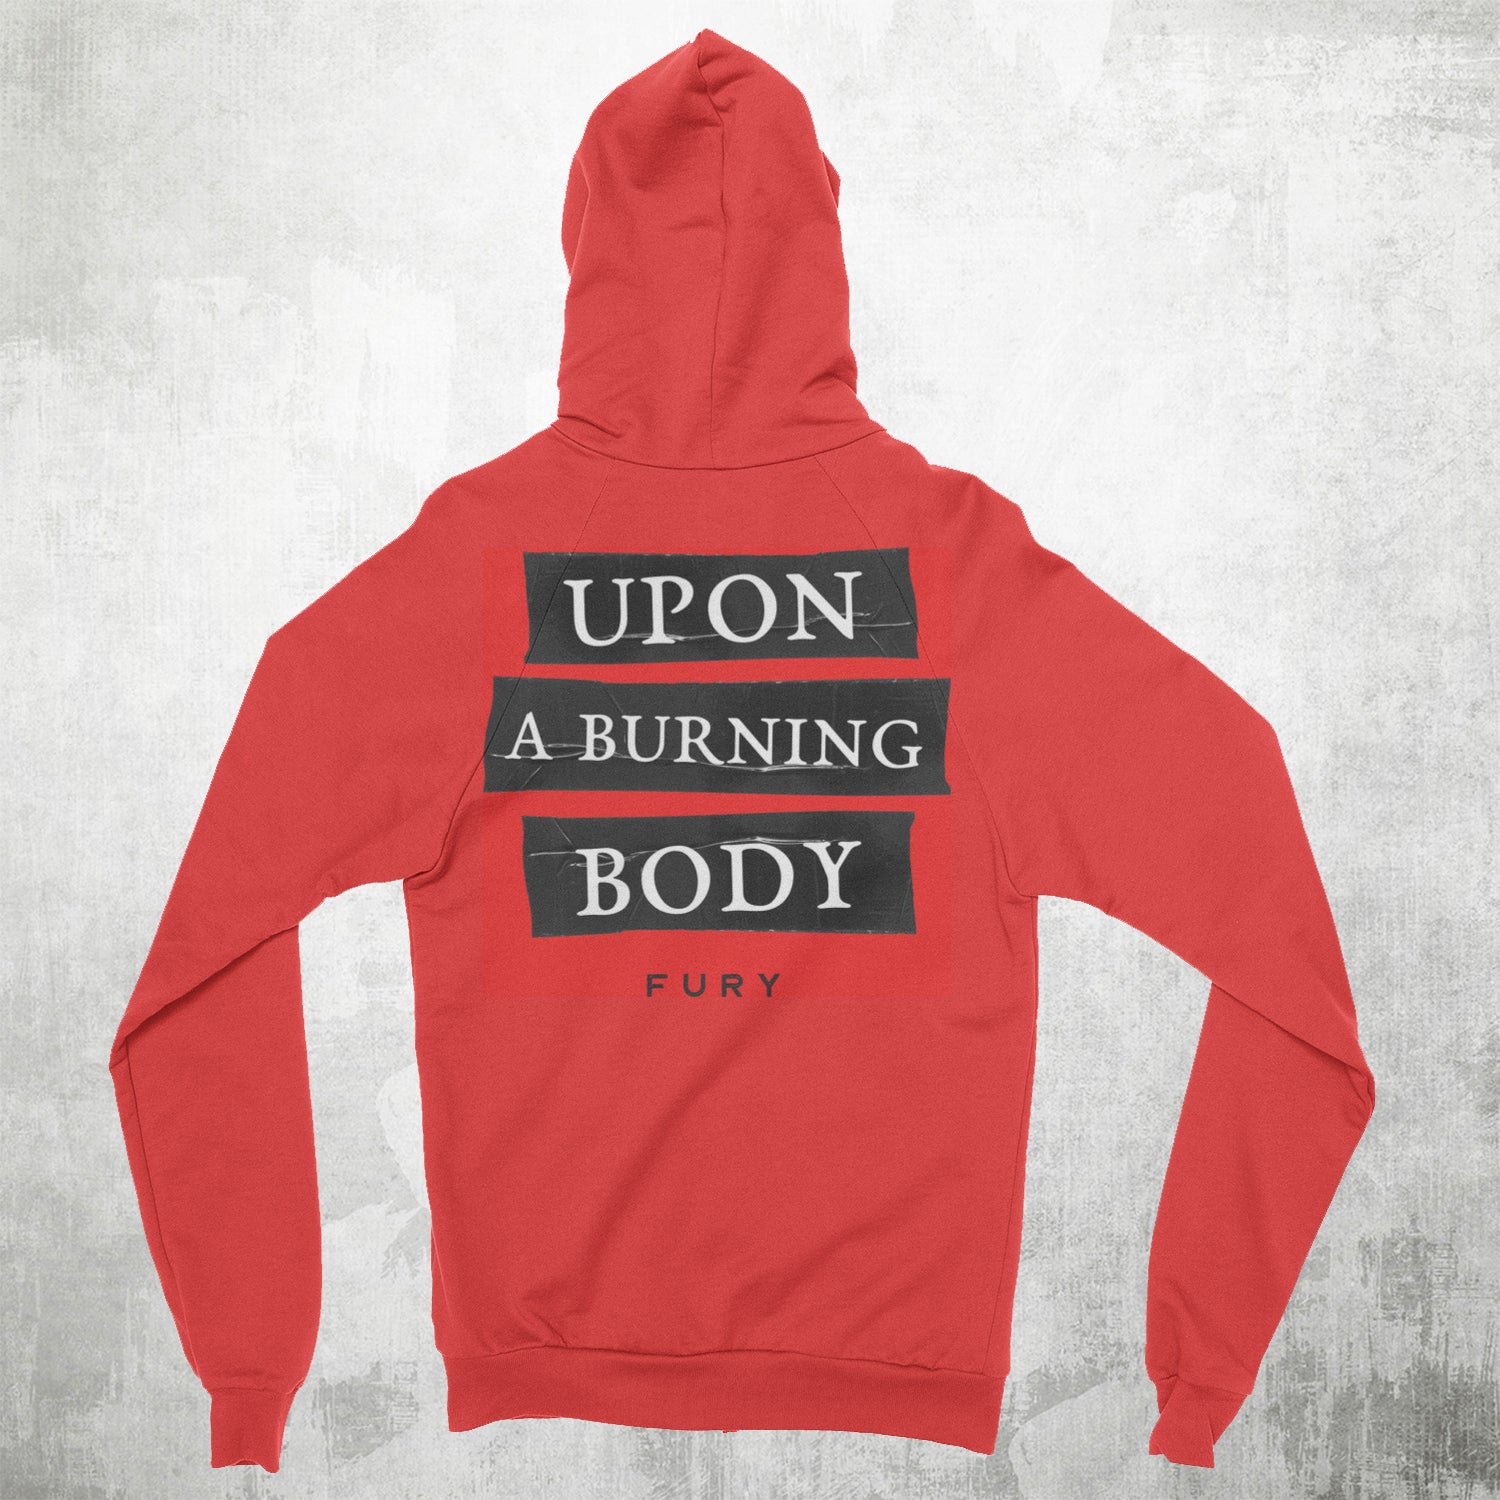 Upon A Burning Body - Fury zip-up hoodie